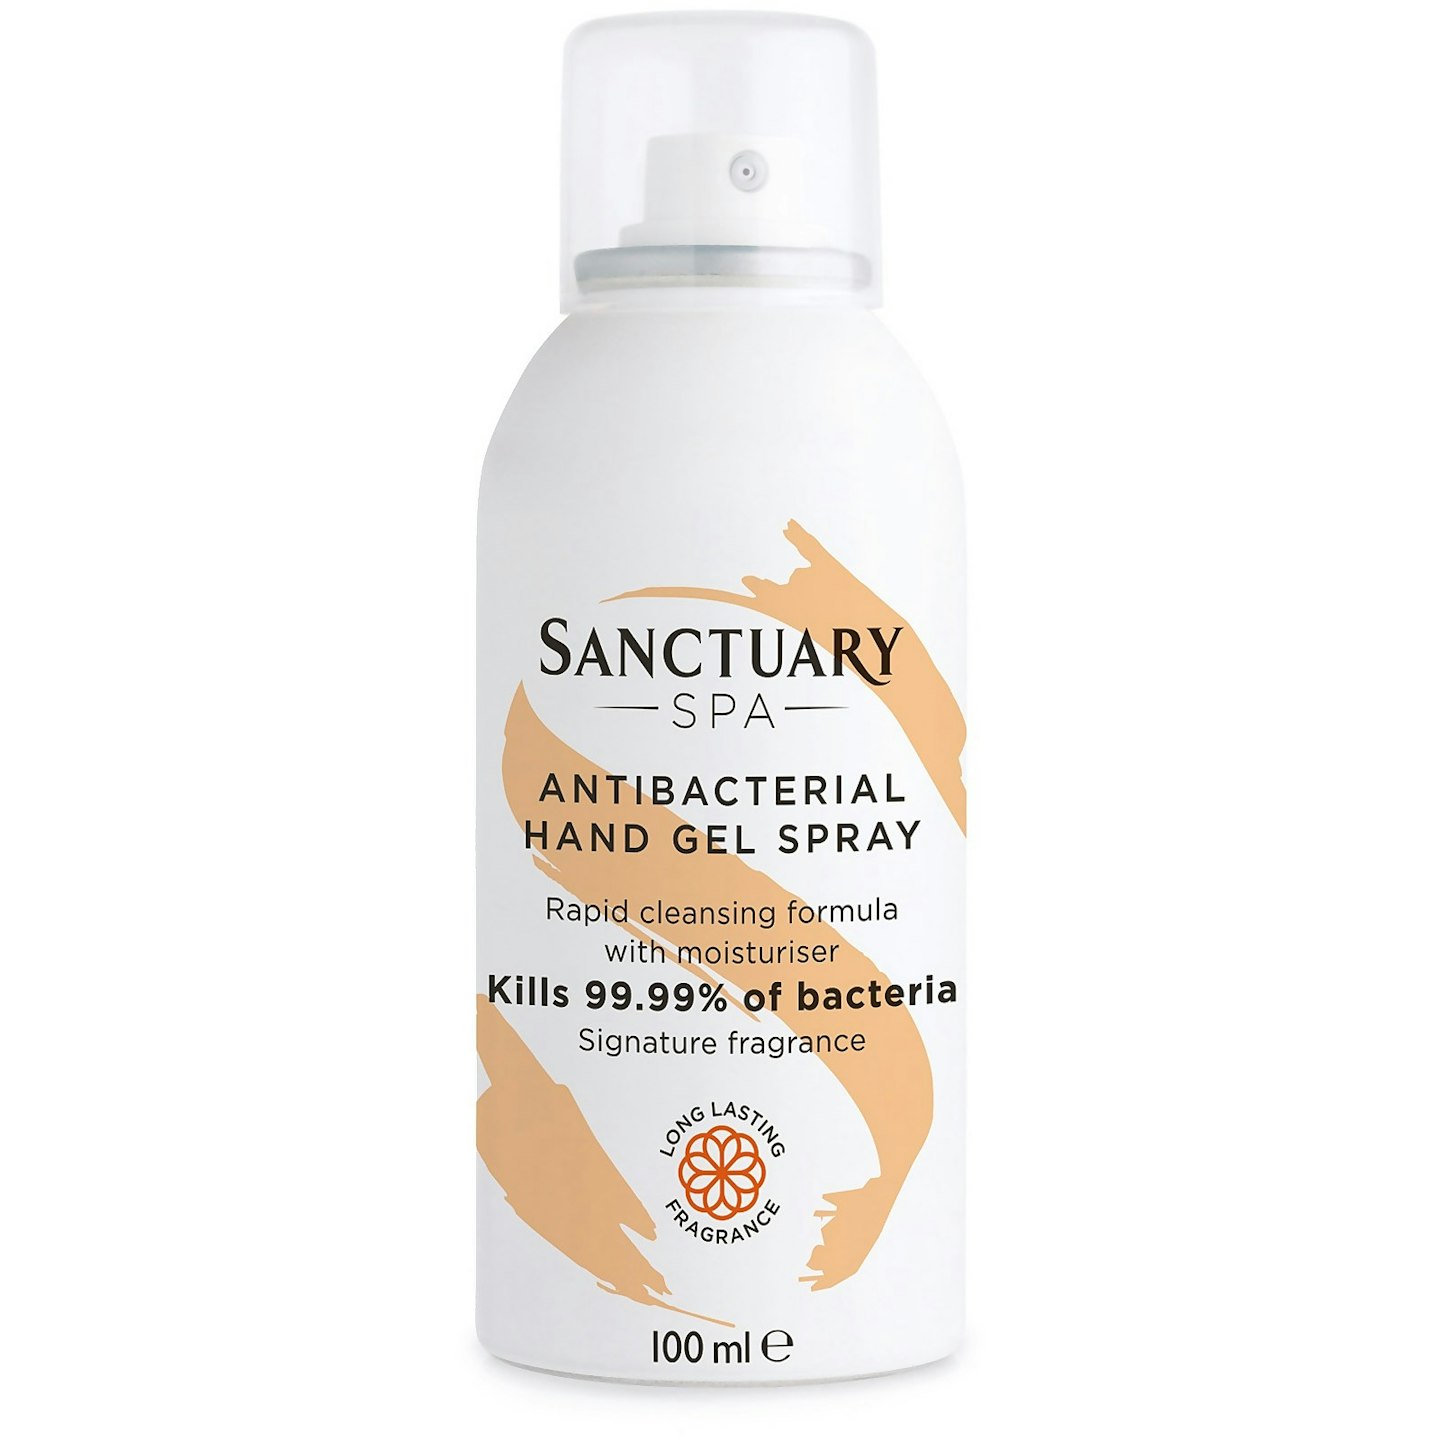 Sanctuary Spa Antibacterial Hand Gel Spray